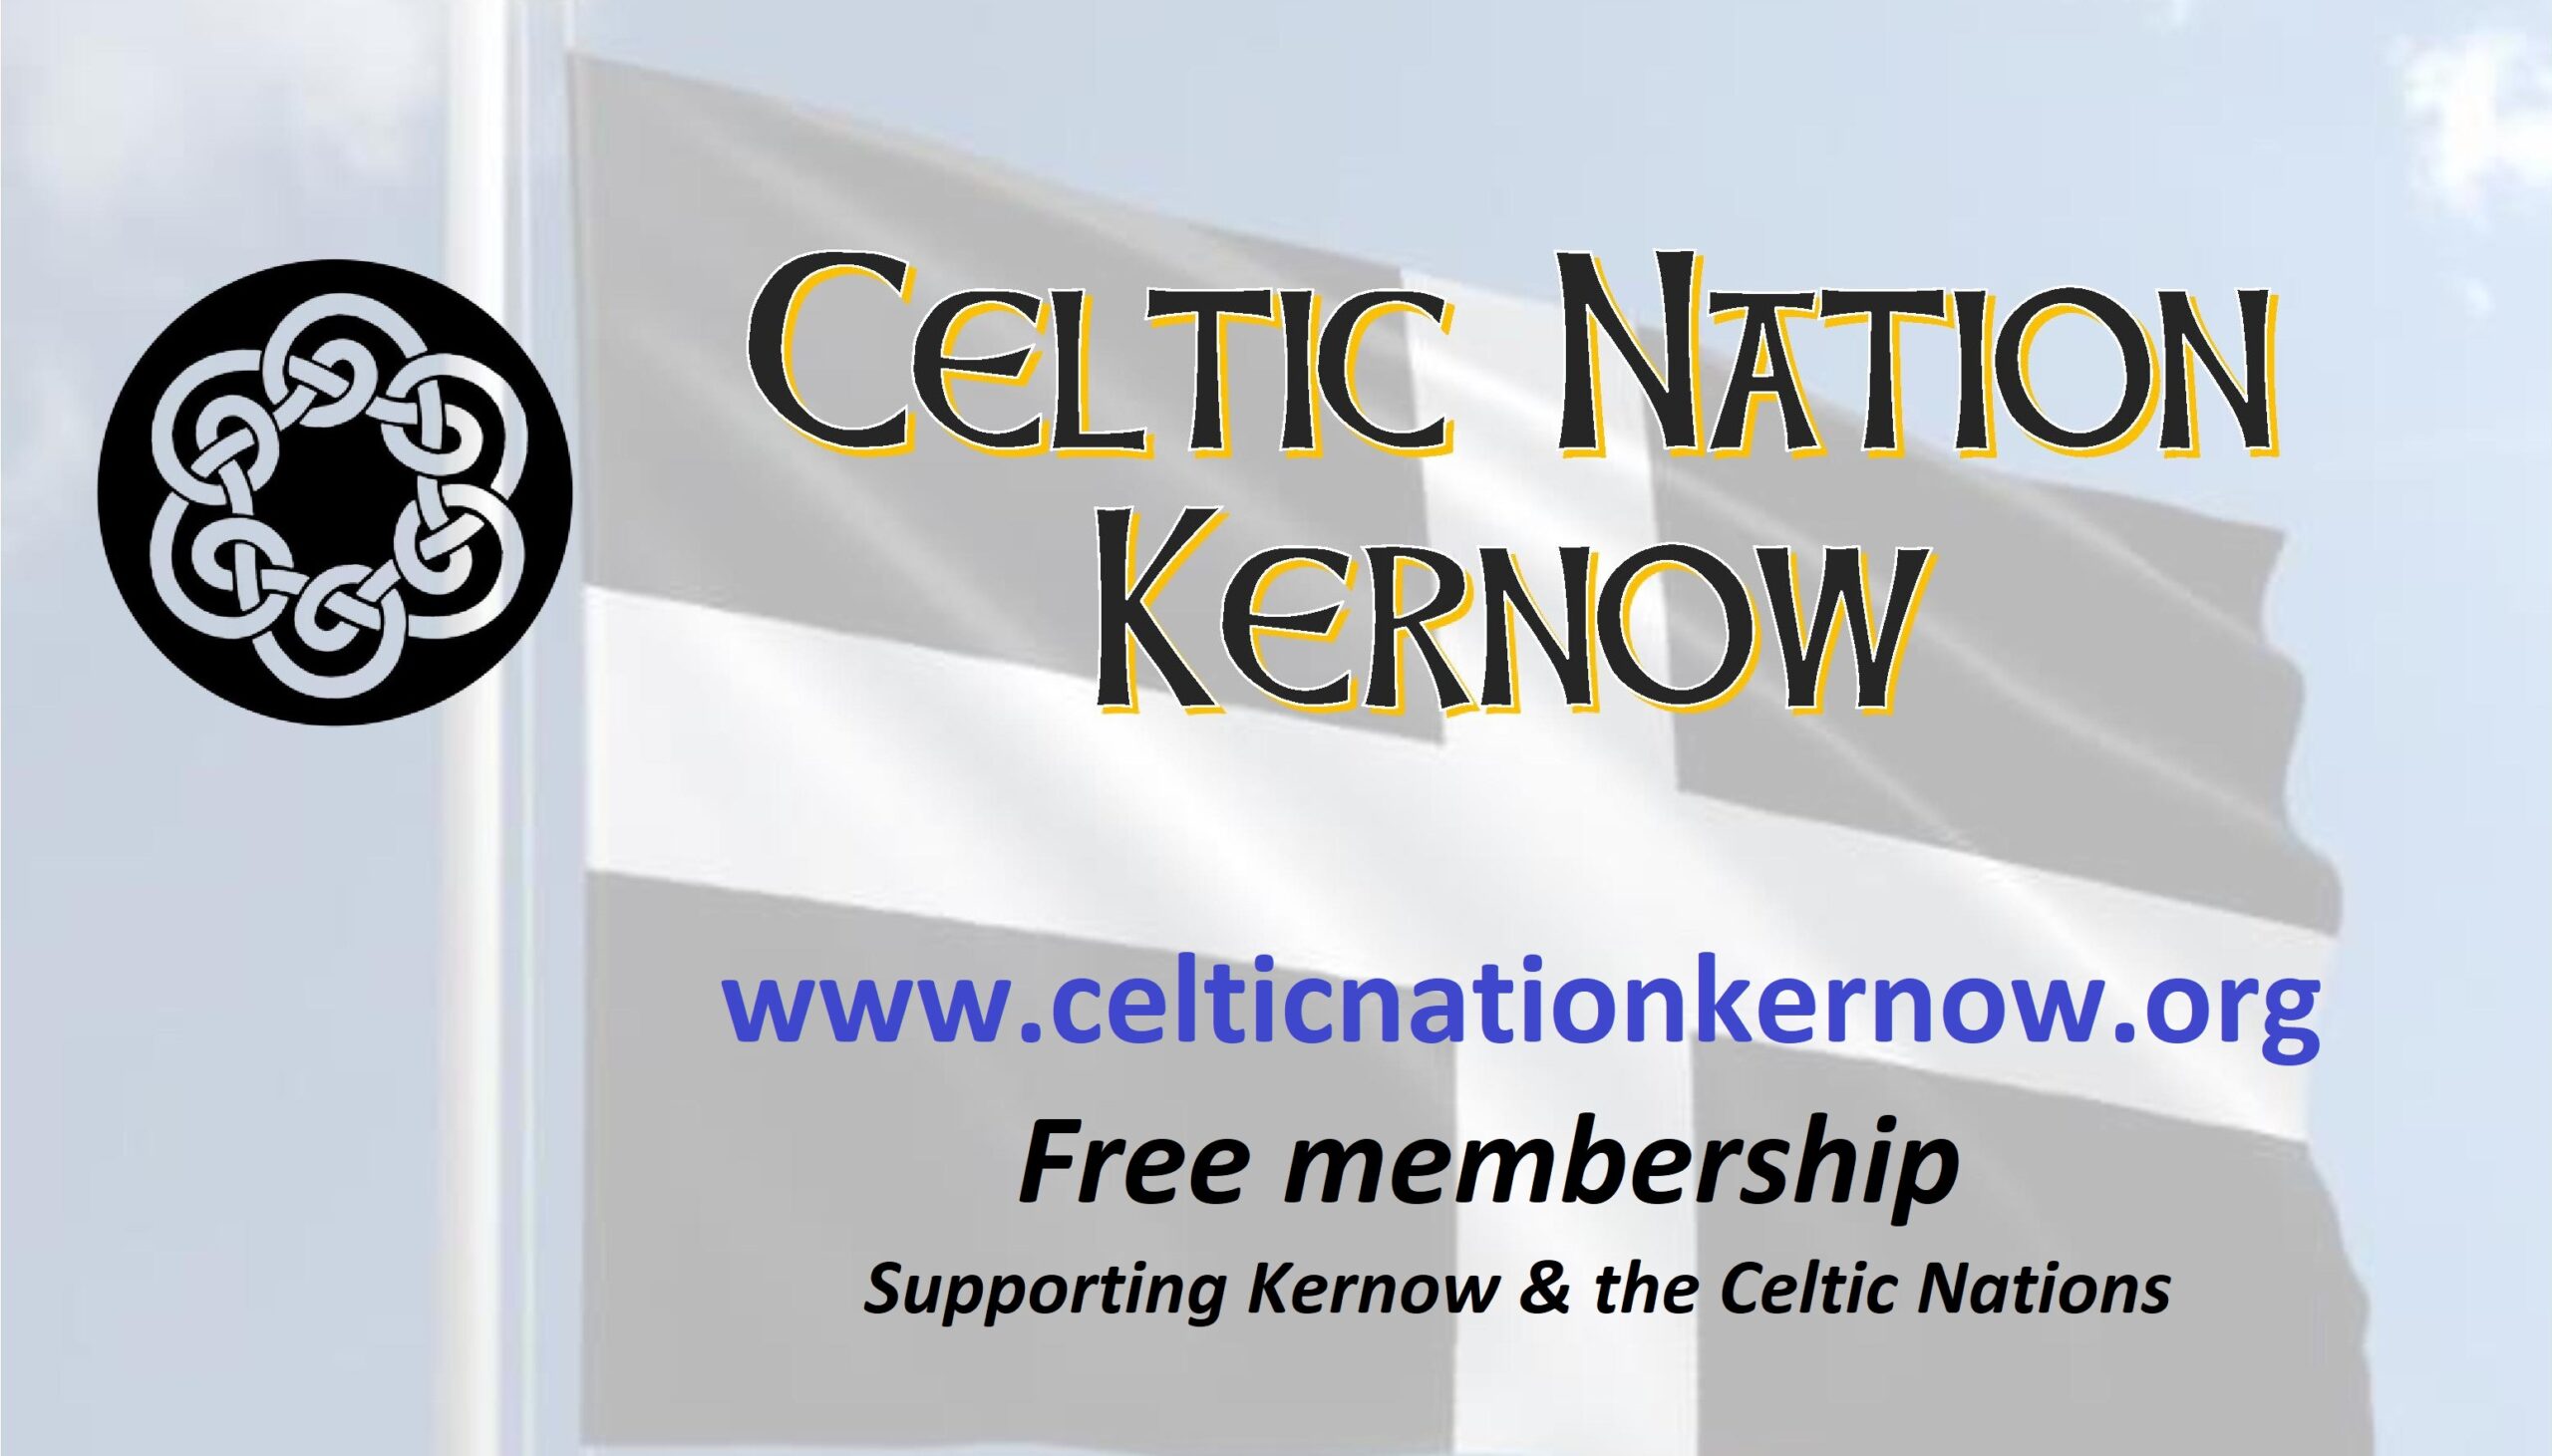 Celtic Nation Kernow - FREE Membership